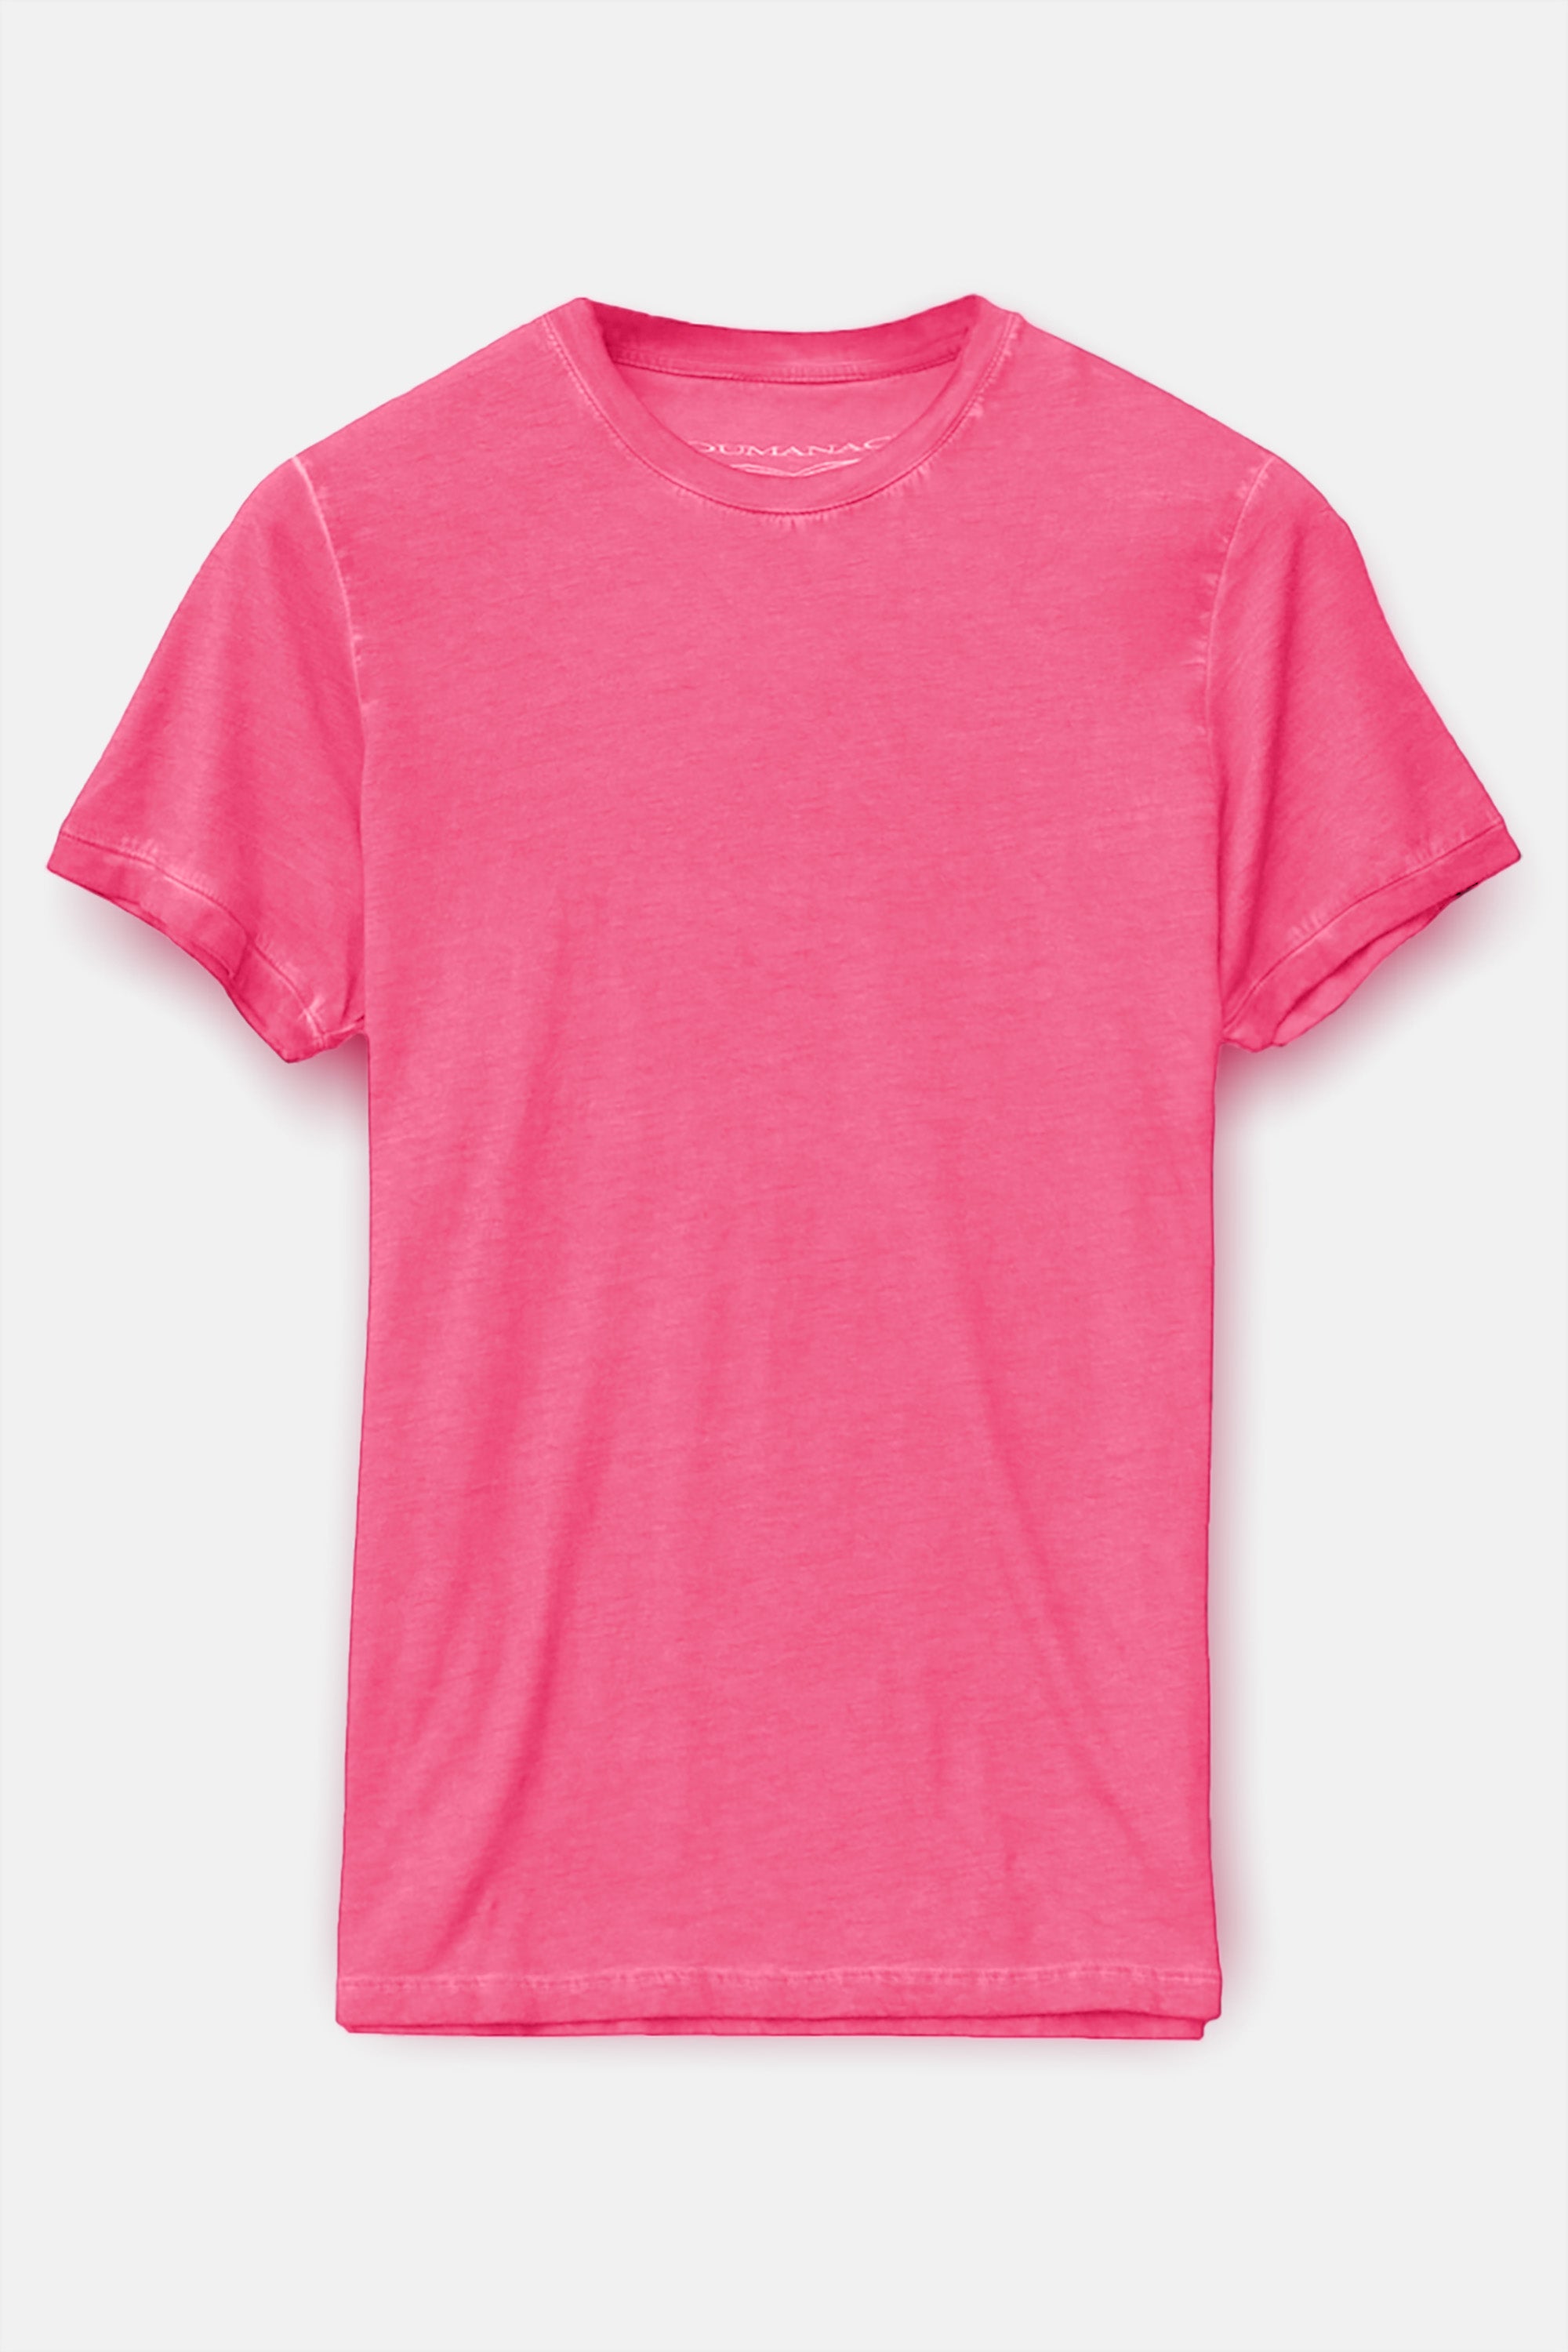 Smart Casual Cotton T-Shirt - Fragola